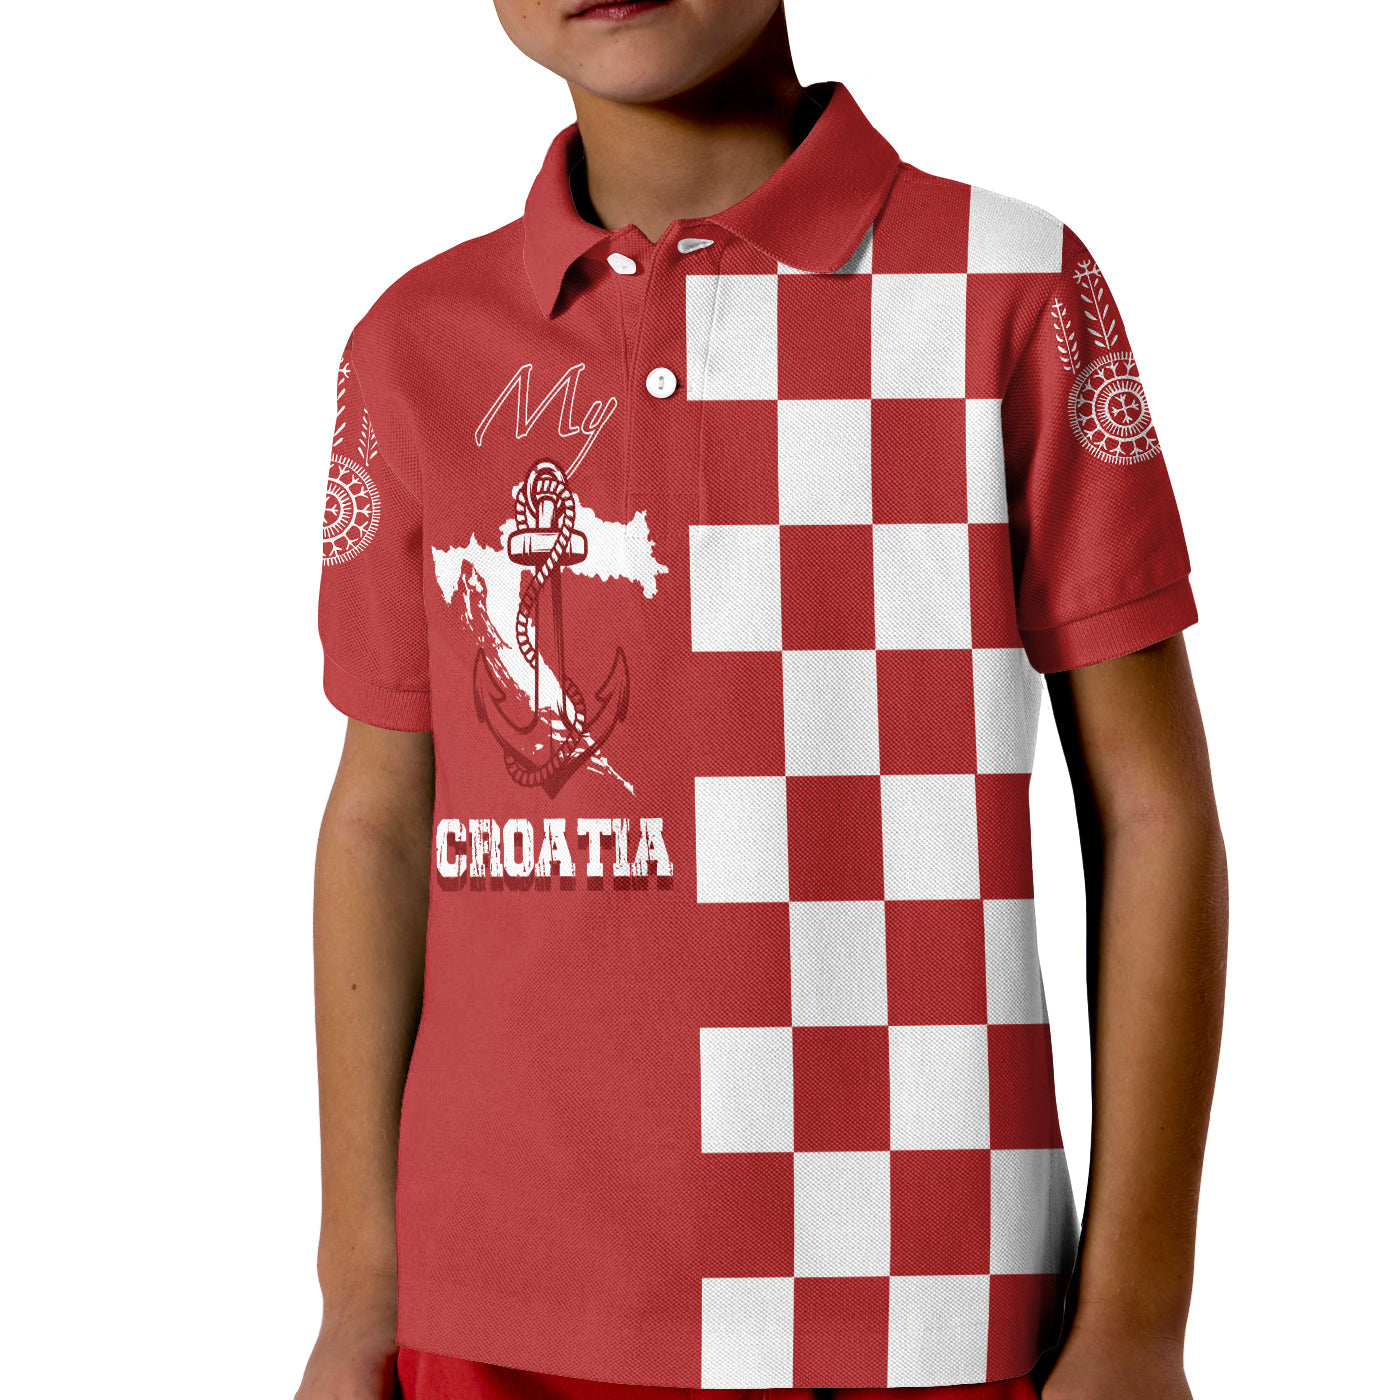 croatia-checkerboard-kid-polo-shirt-croatia-flag-with-eagle